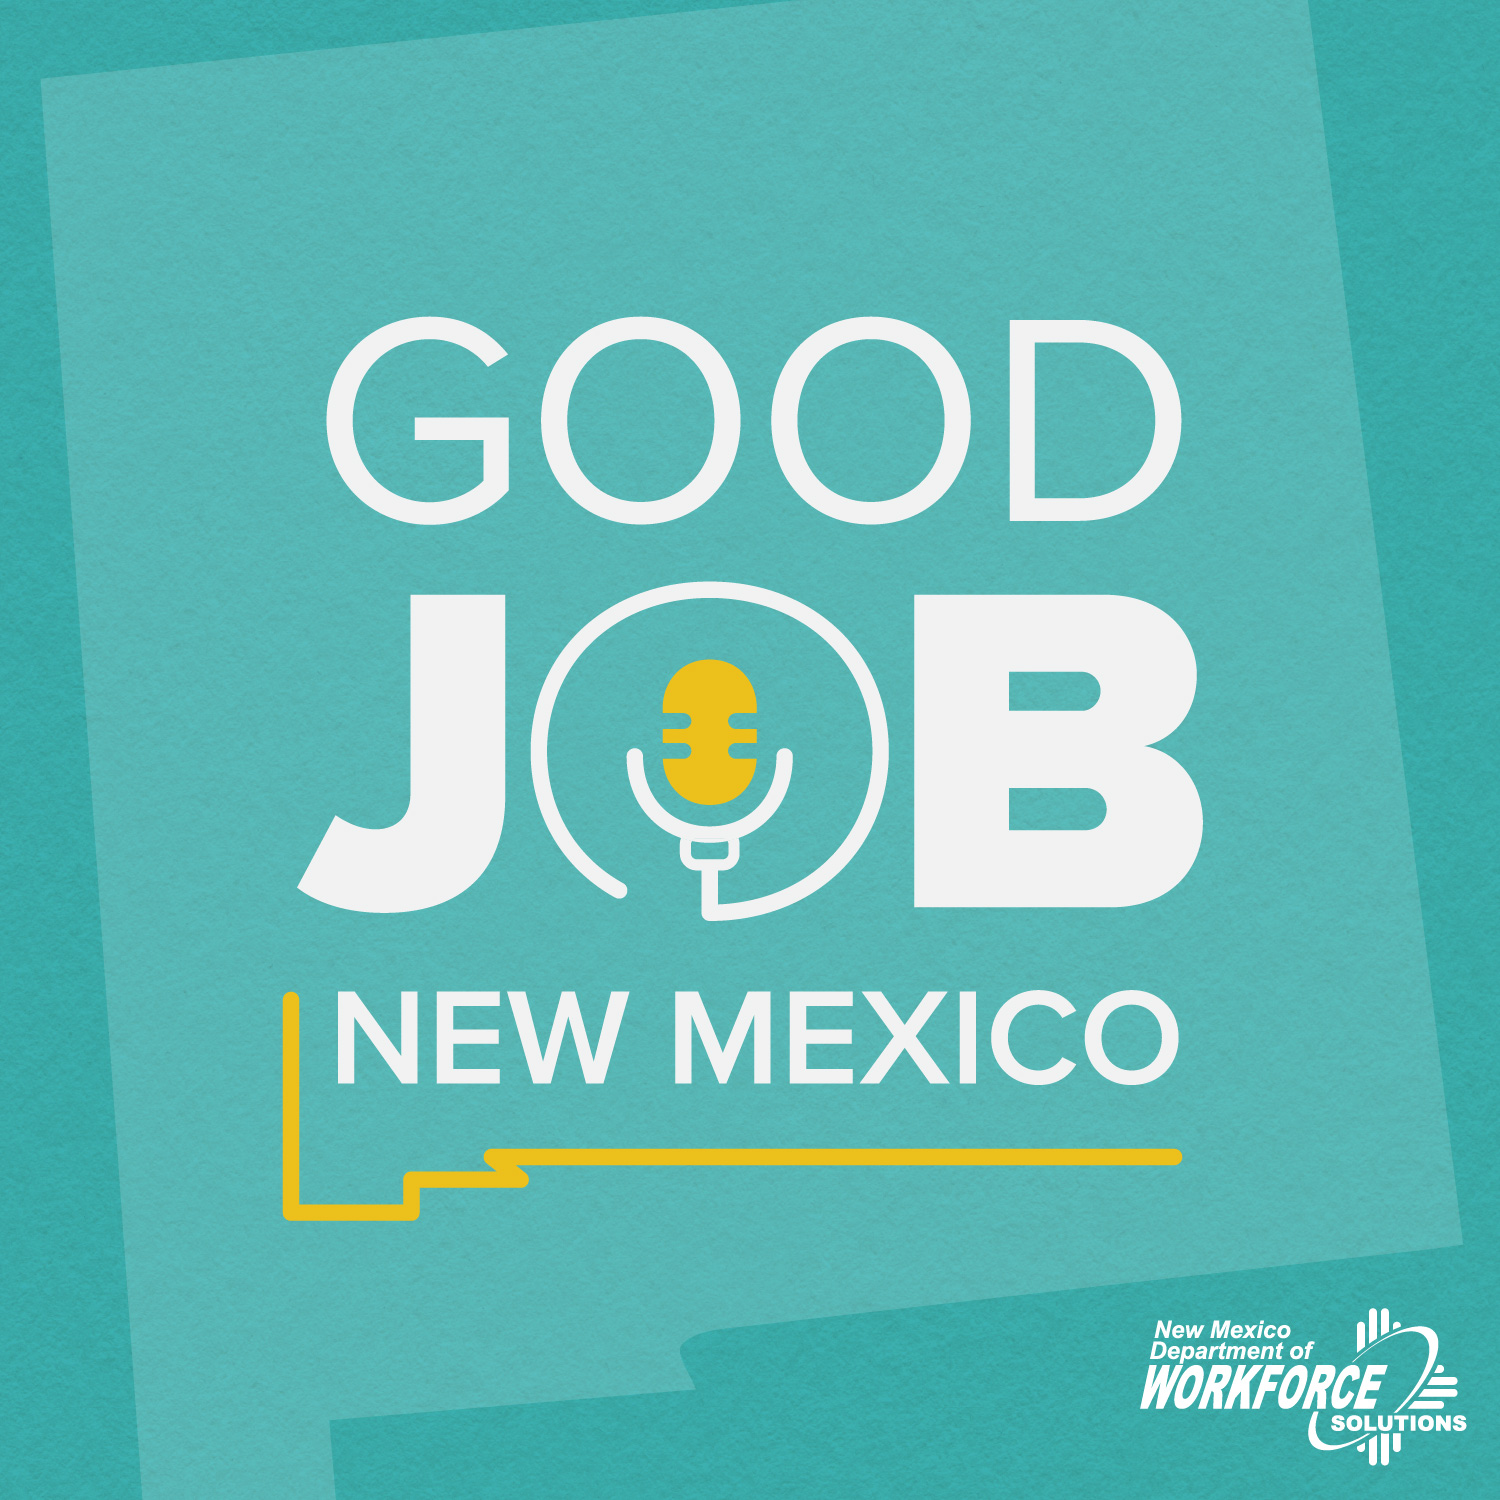 Good Job New Mexico!